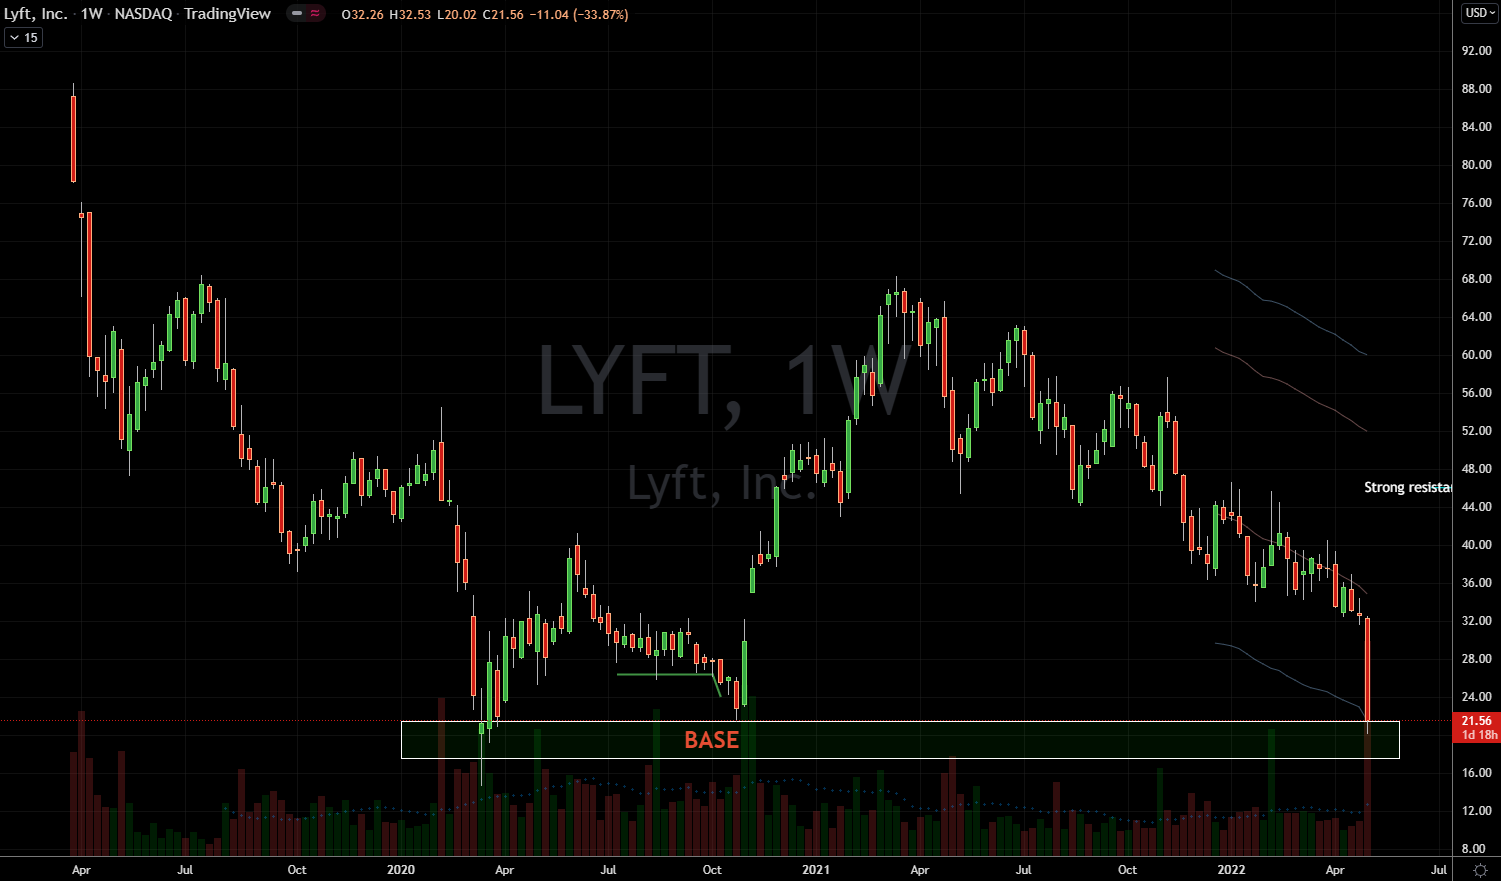 Stocks to Buy: Lyft (LYFT) Stock Chart Showing Rebound Potential